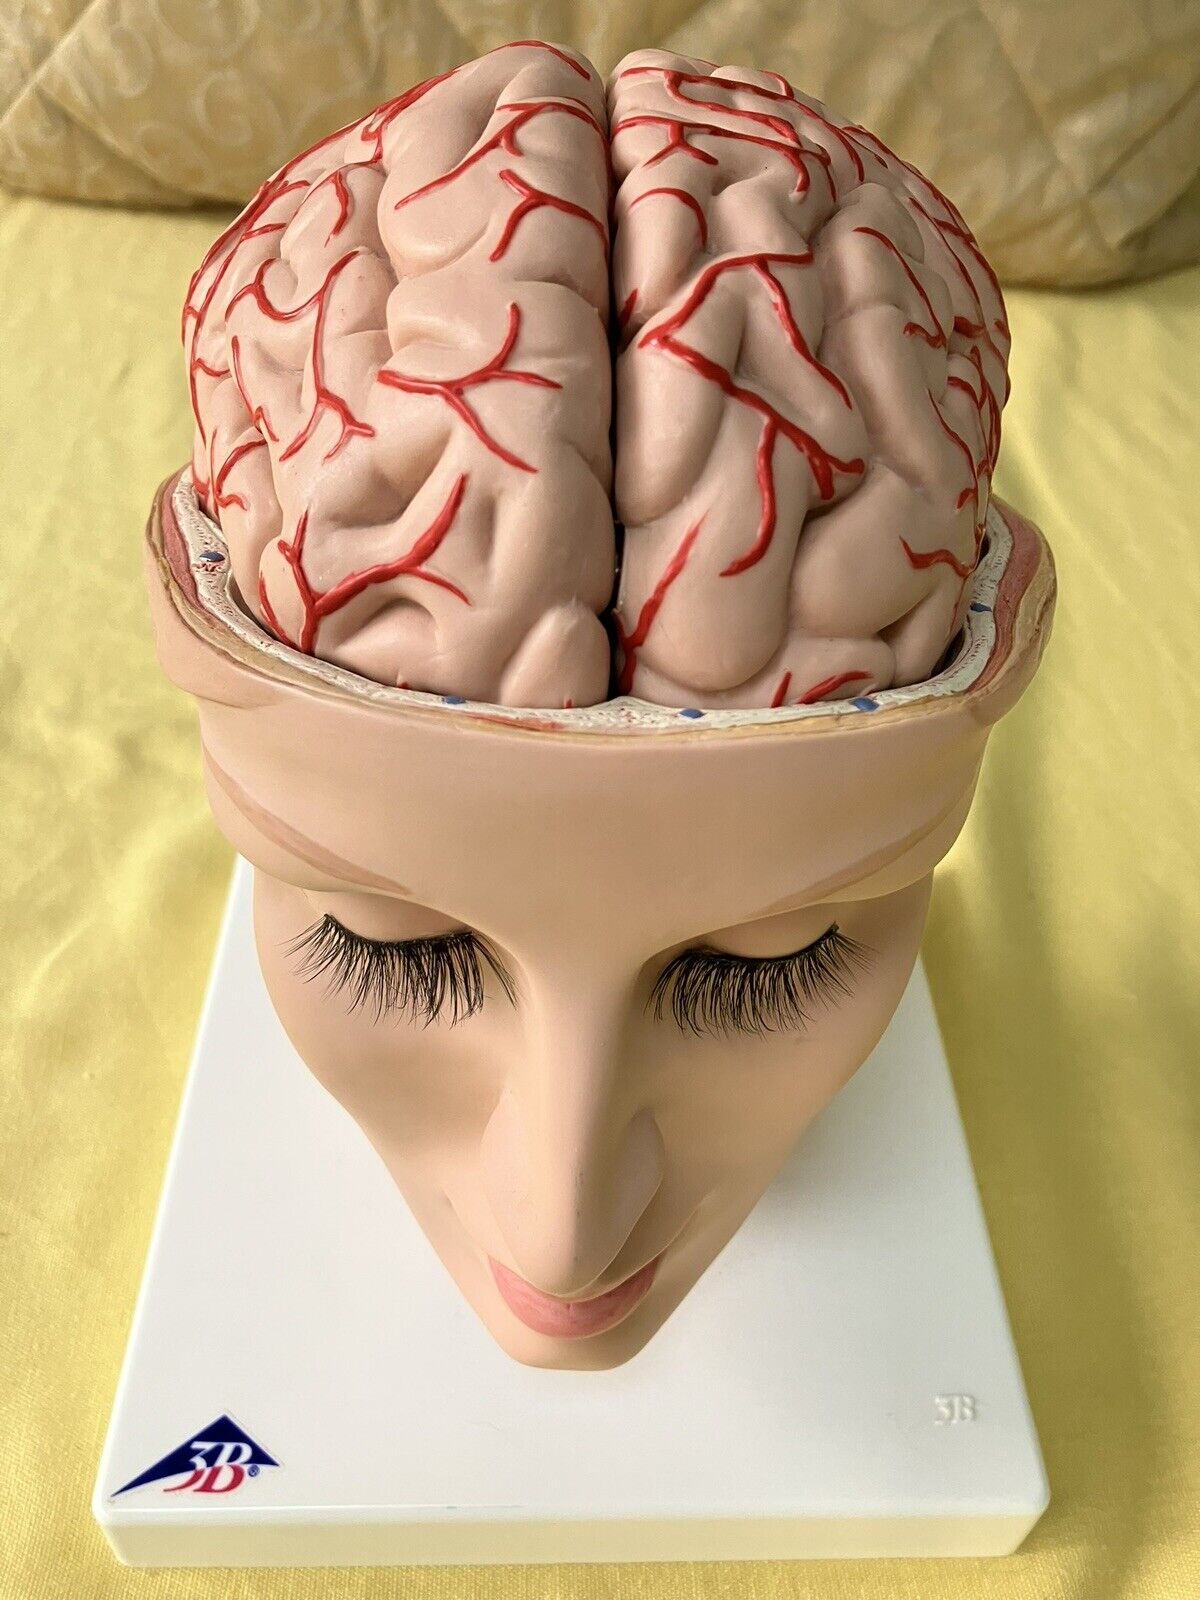 Excellent 3B Scientific Human Brain Model w/ Head and Face, Model C25, 8 pieces.